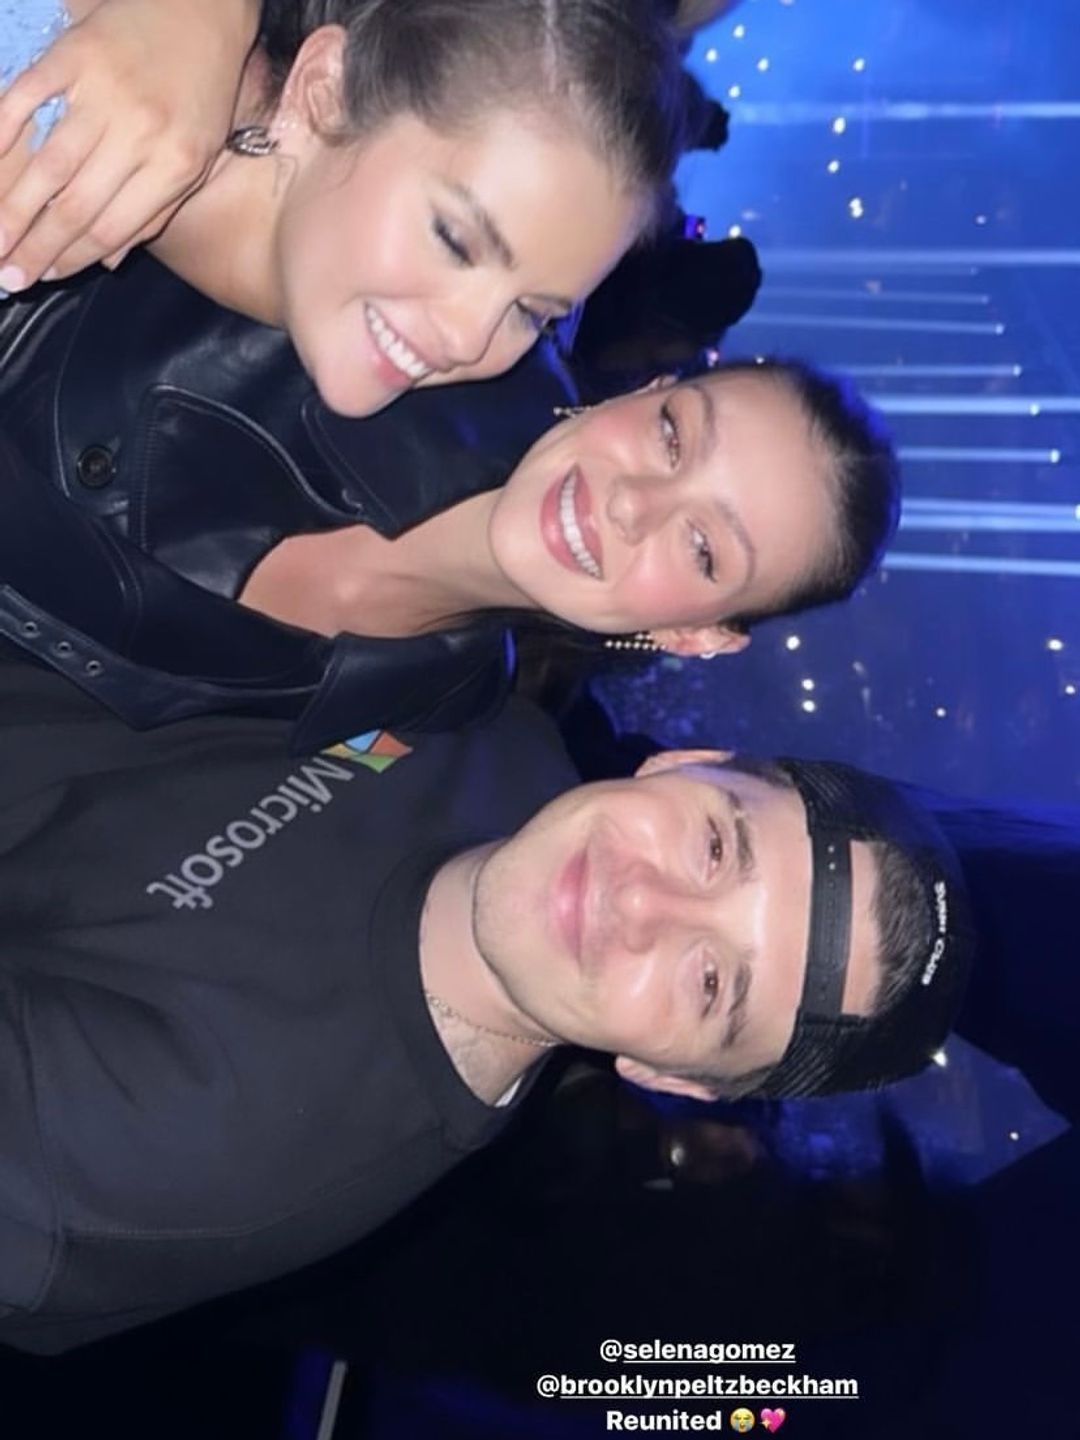 Nicola Peltz and Brooklyn Beckham reuniting with their close friend Selena Gomez 